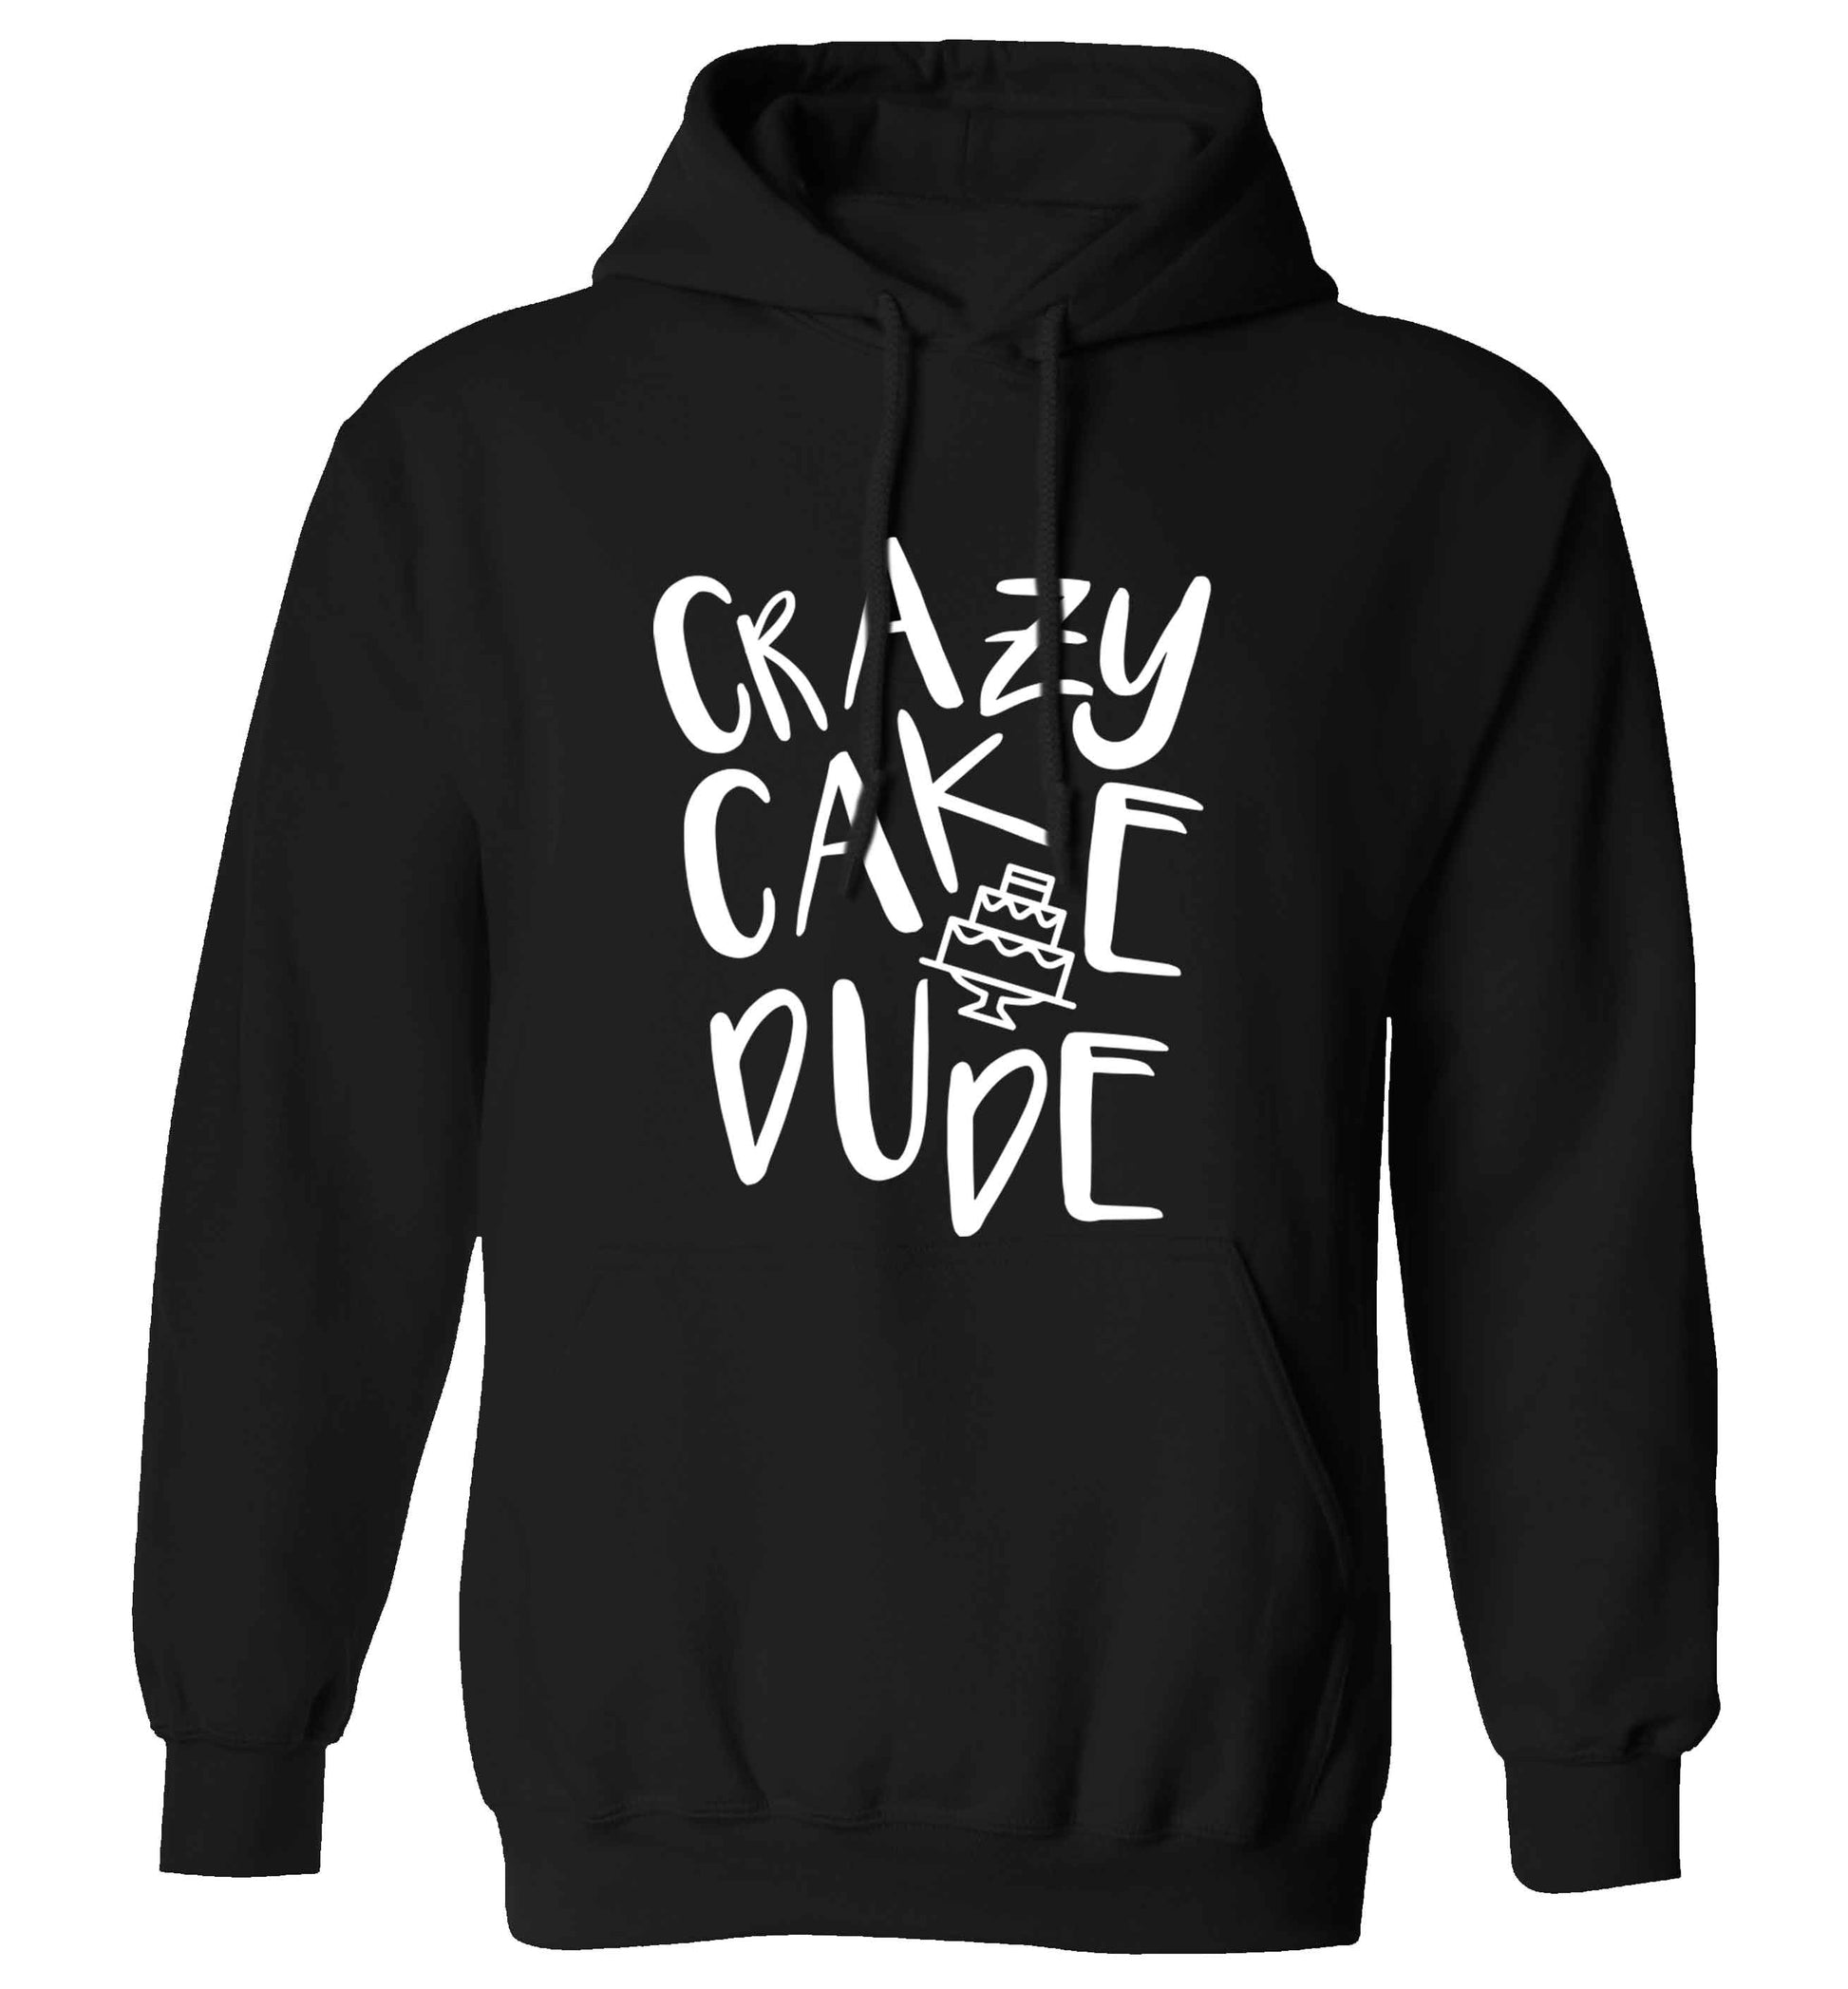 Crazy cake dude adults unisex black hoodie 2XL